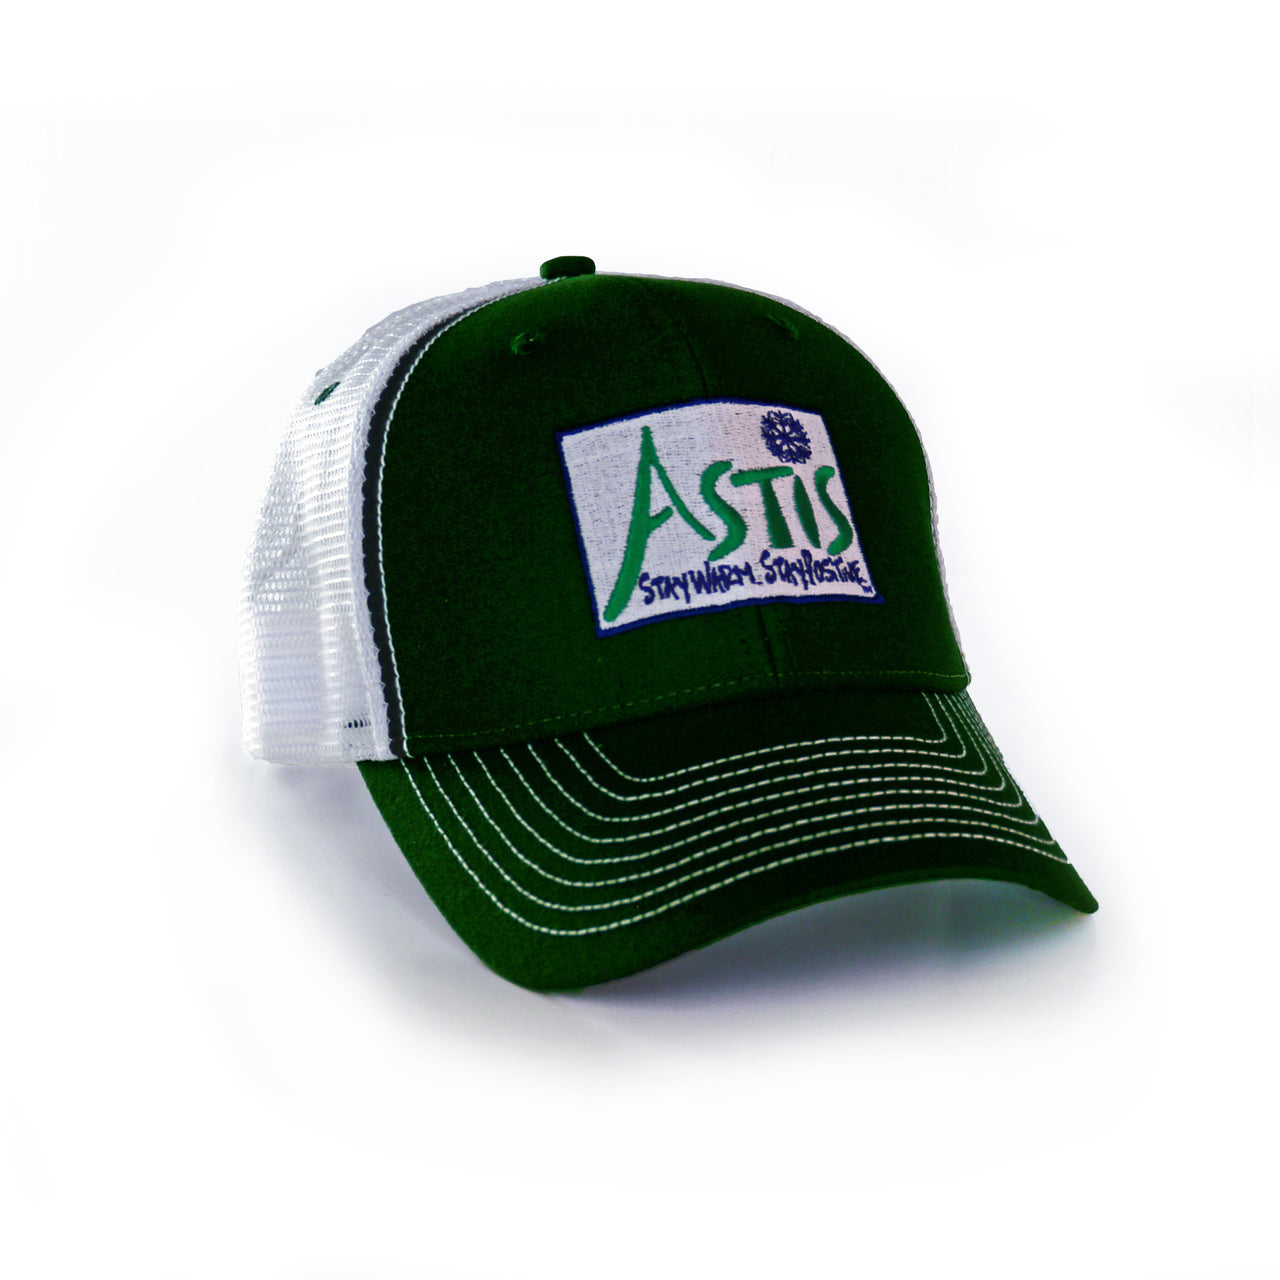 Hunter Green Astis Hat